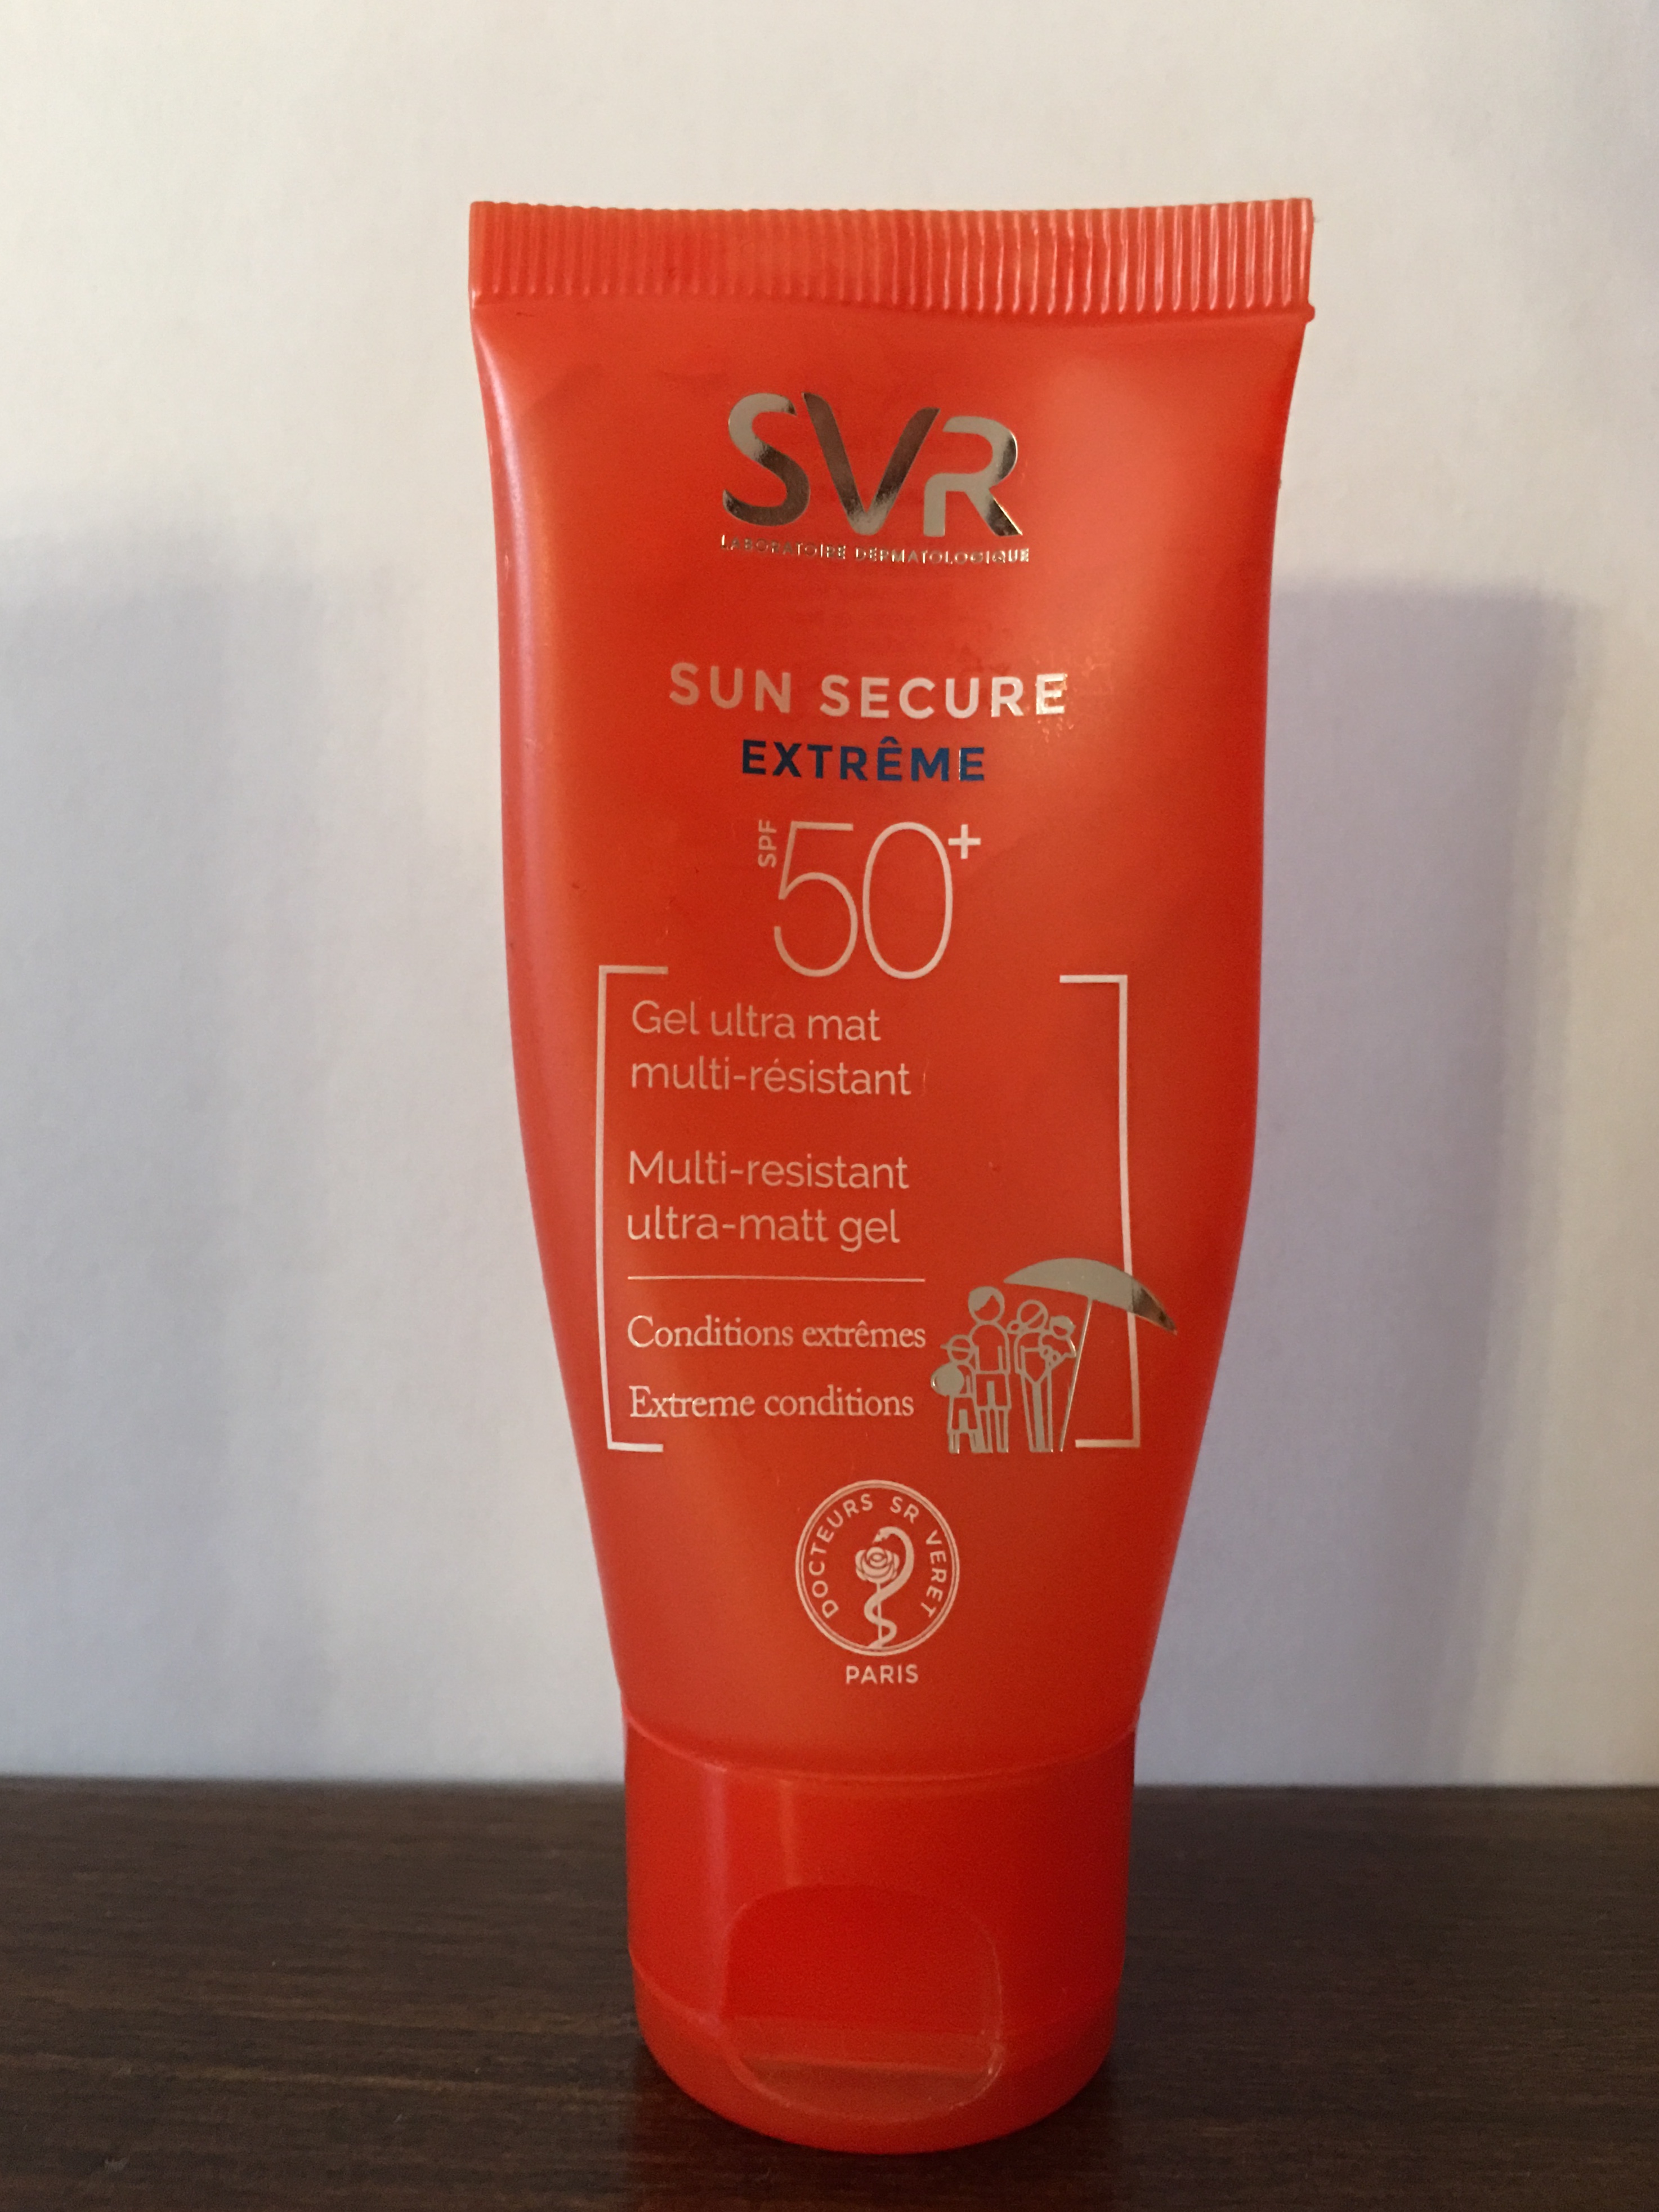 SVR Sun secure Blur spf50+ 50 мл. Svr gel